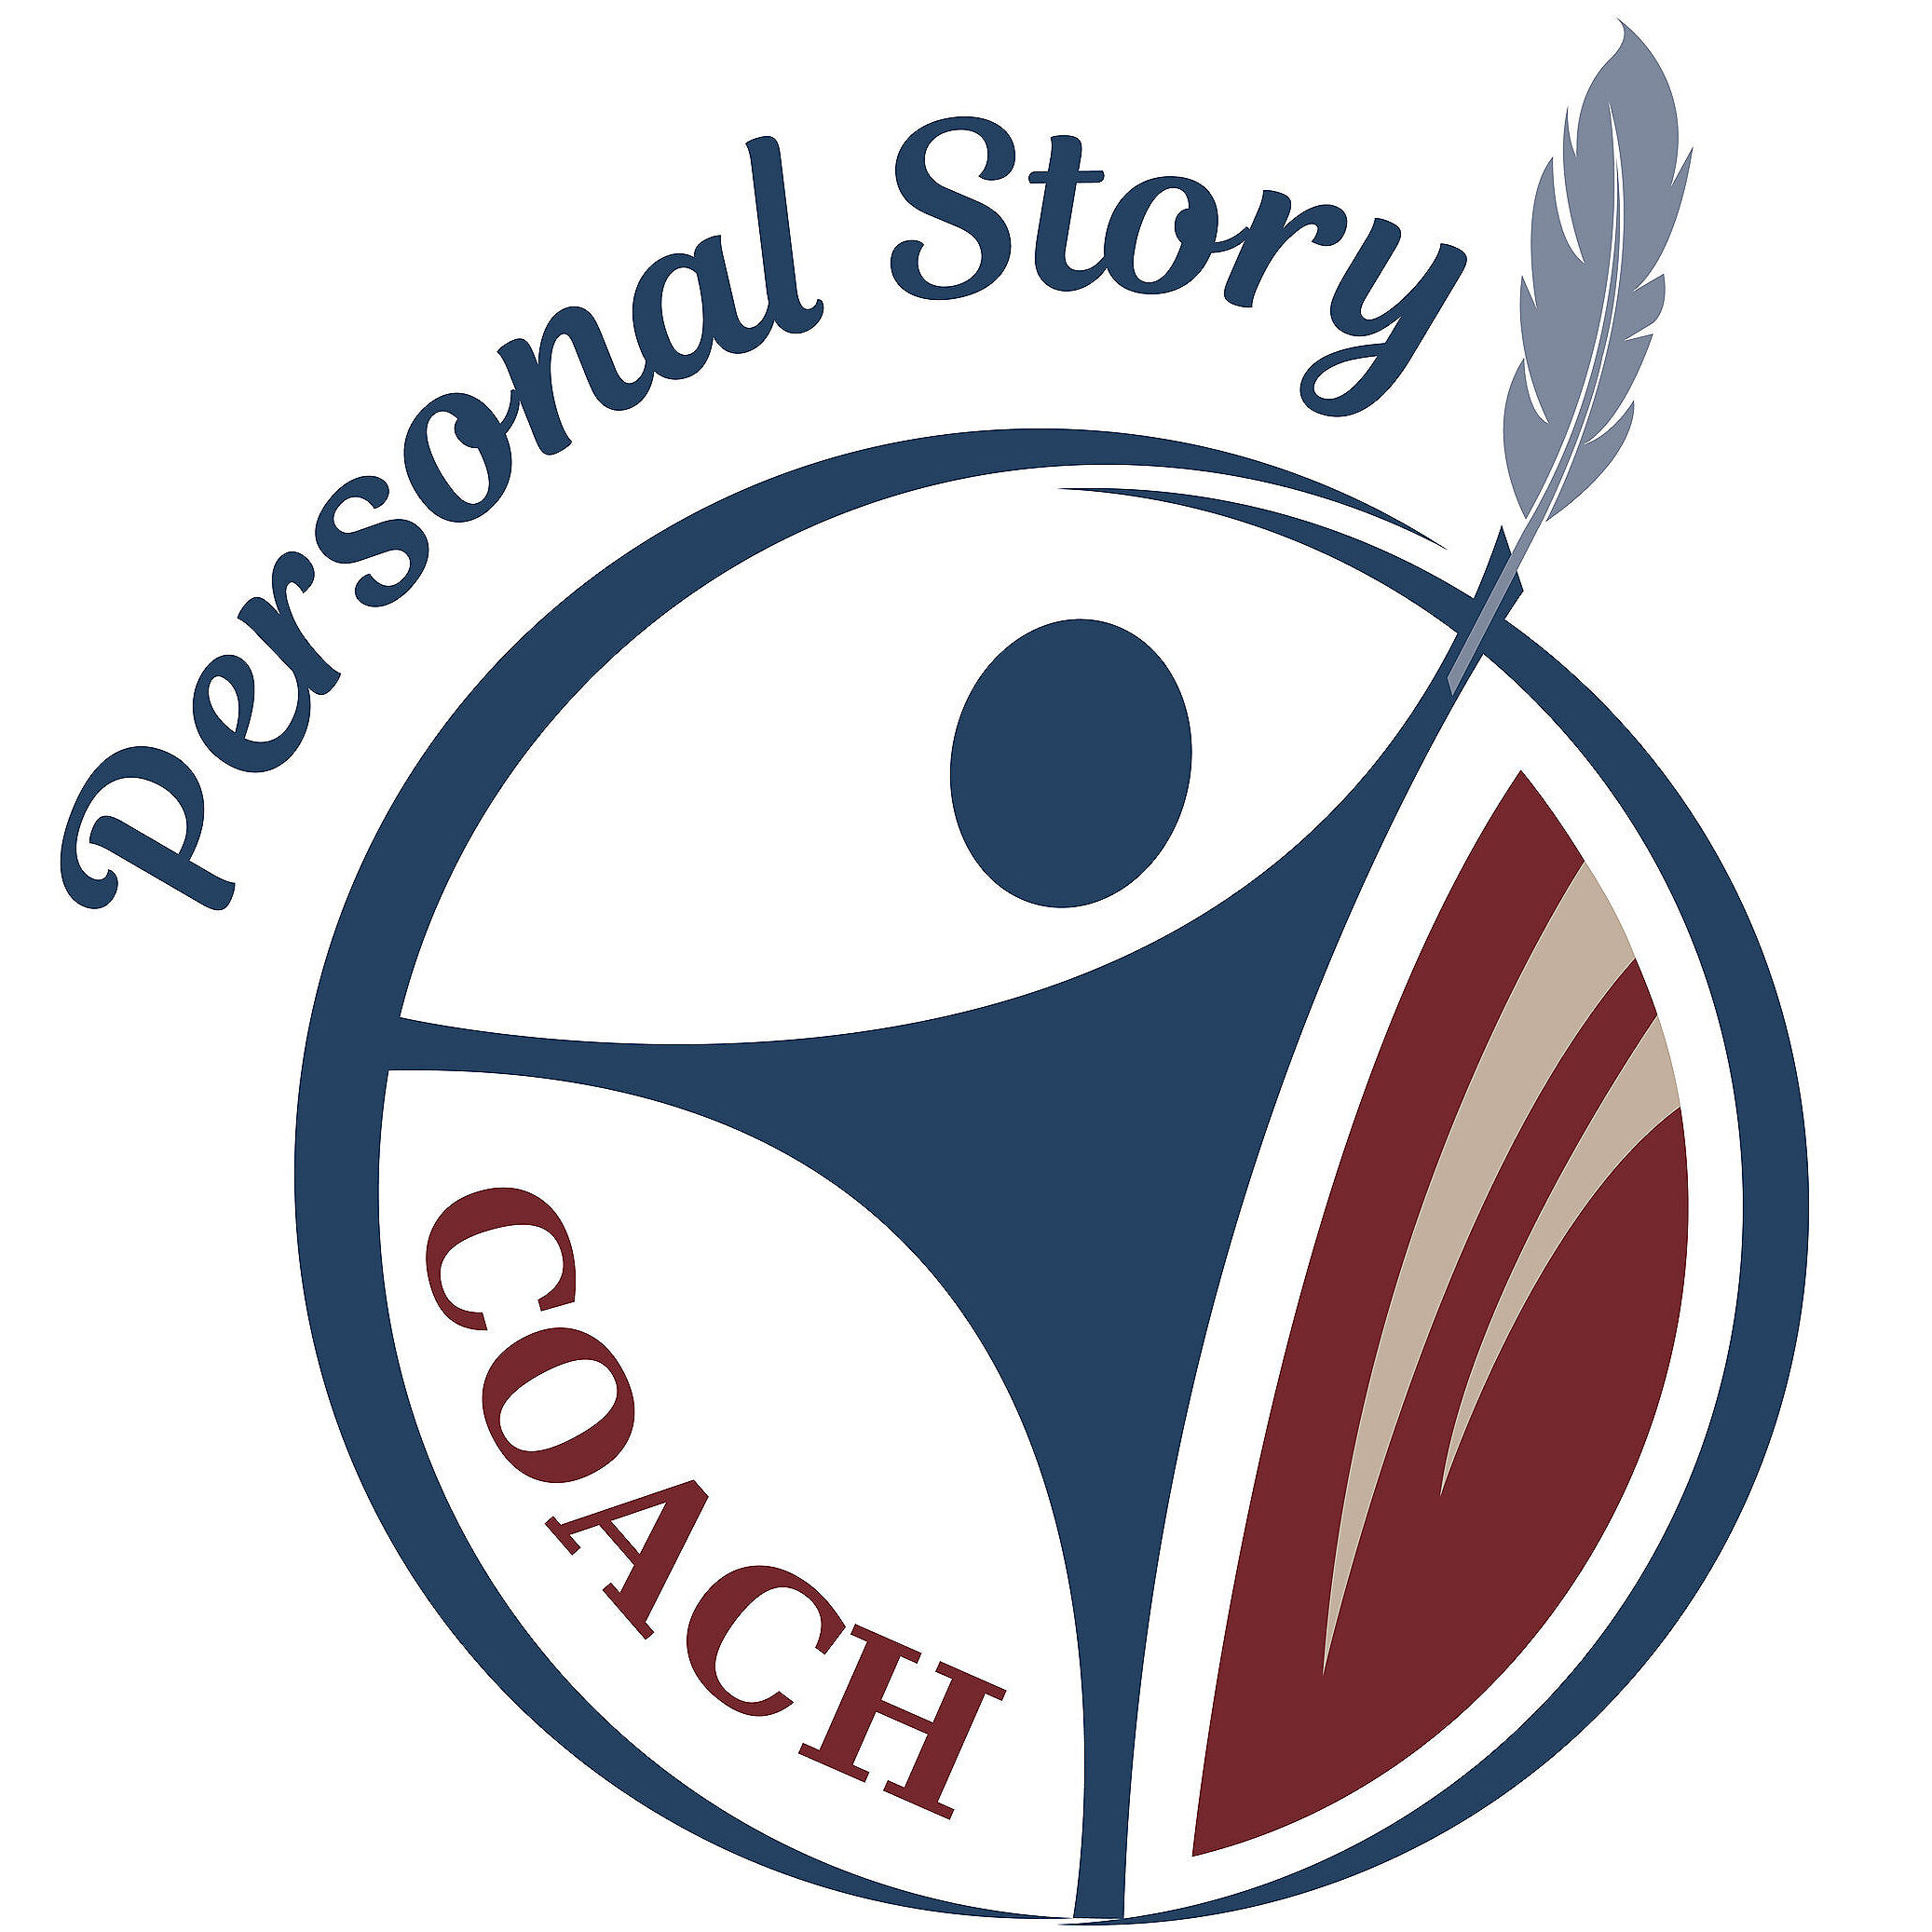 personal story coach logo final  JPG.jpg